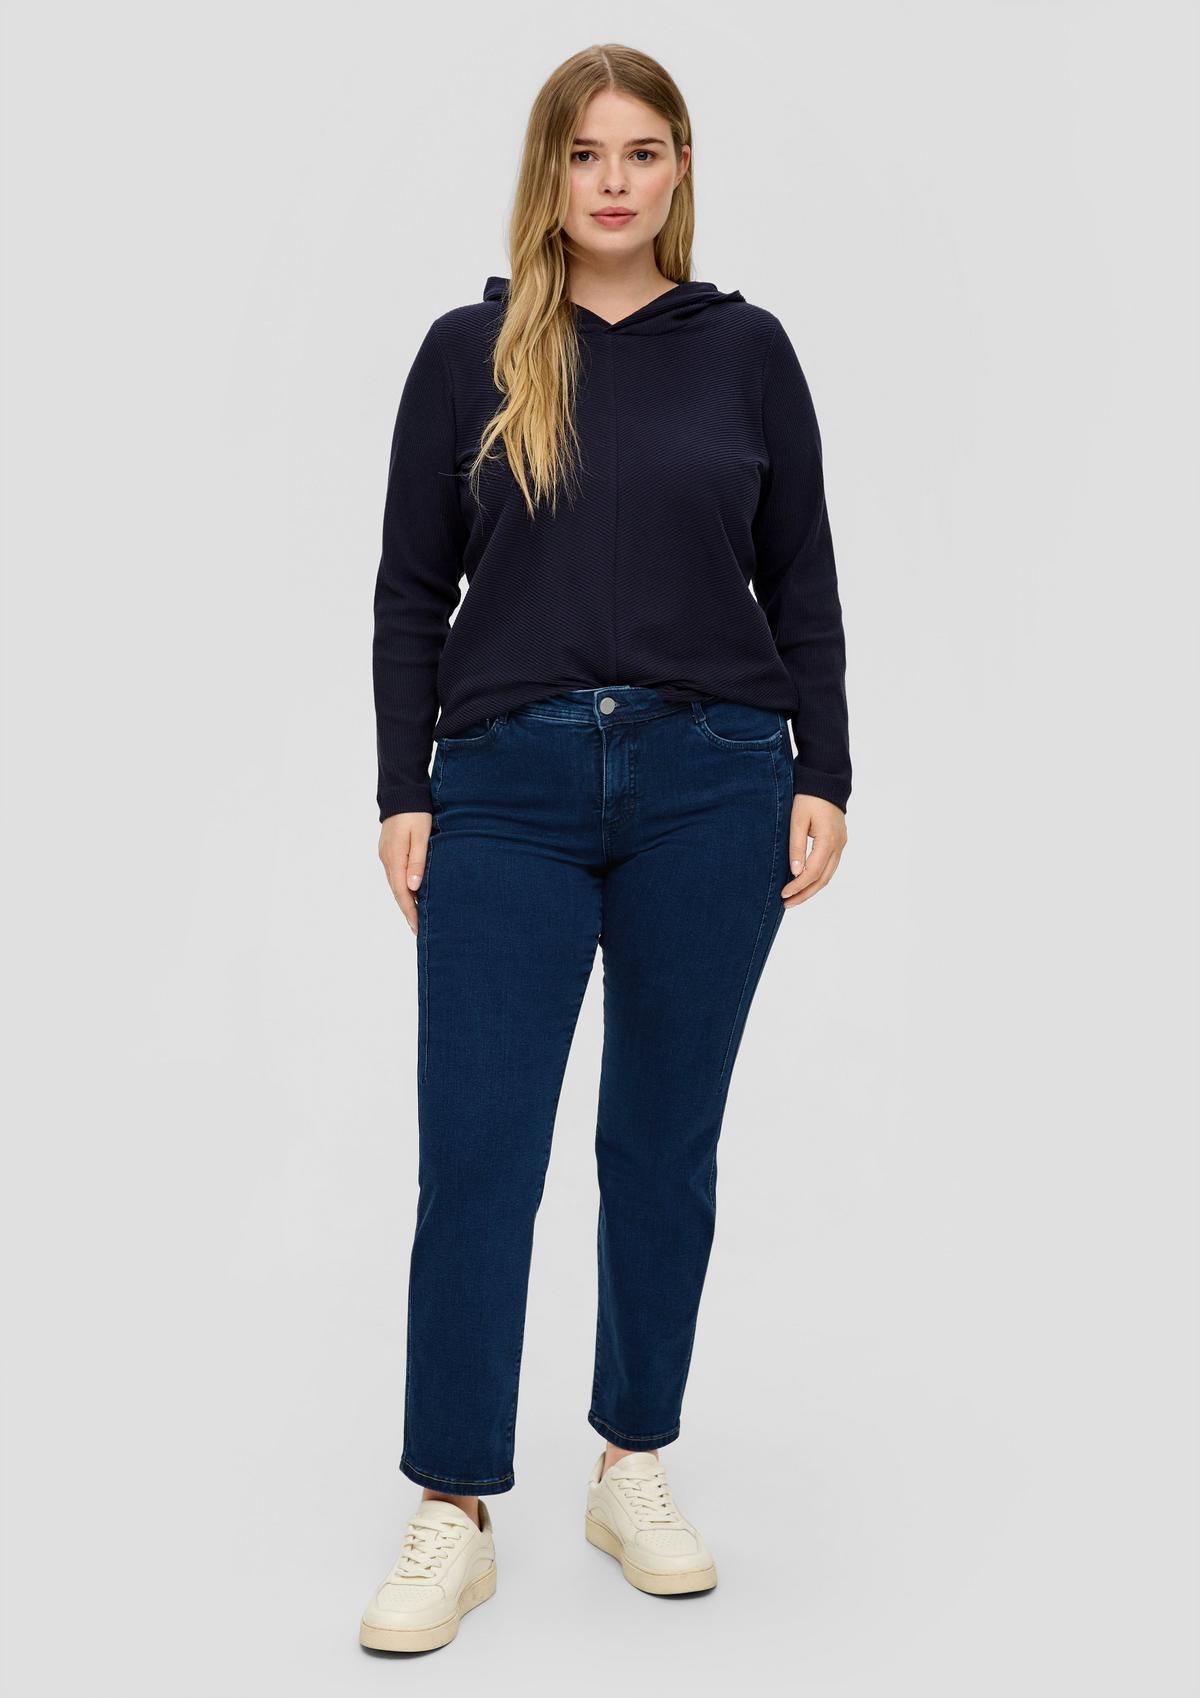 Jeans / curvy fit / mid rise / straight leg